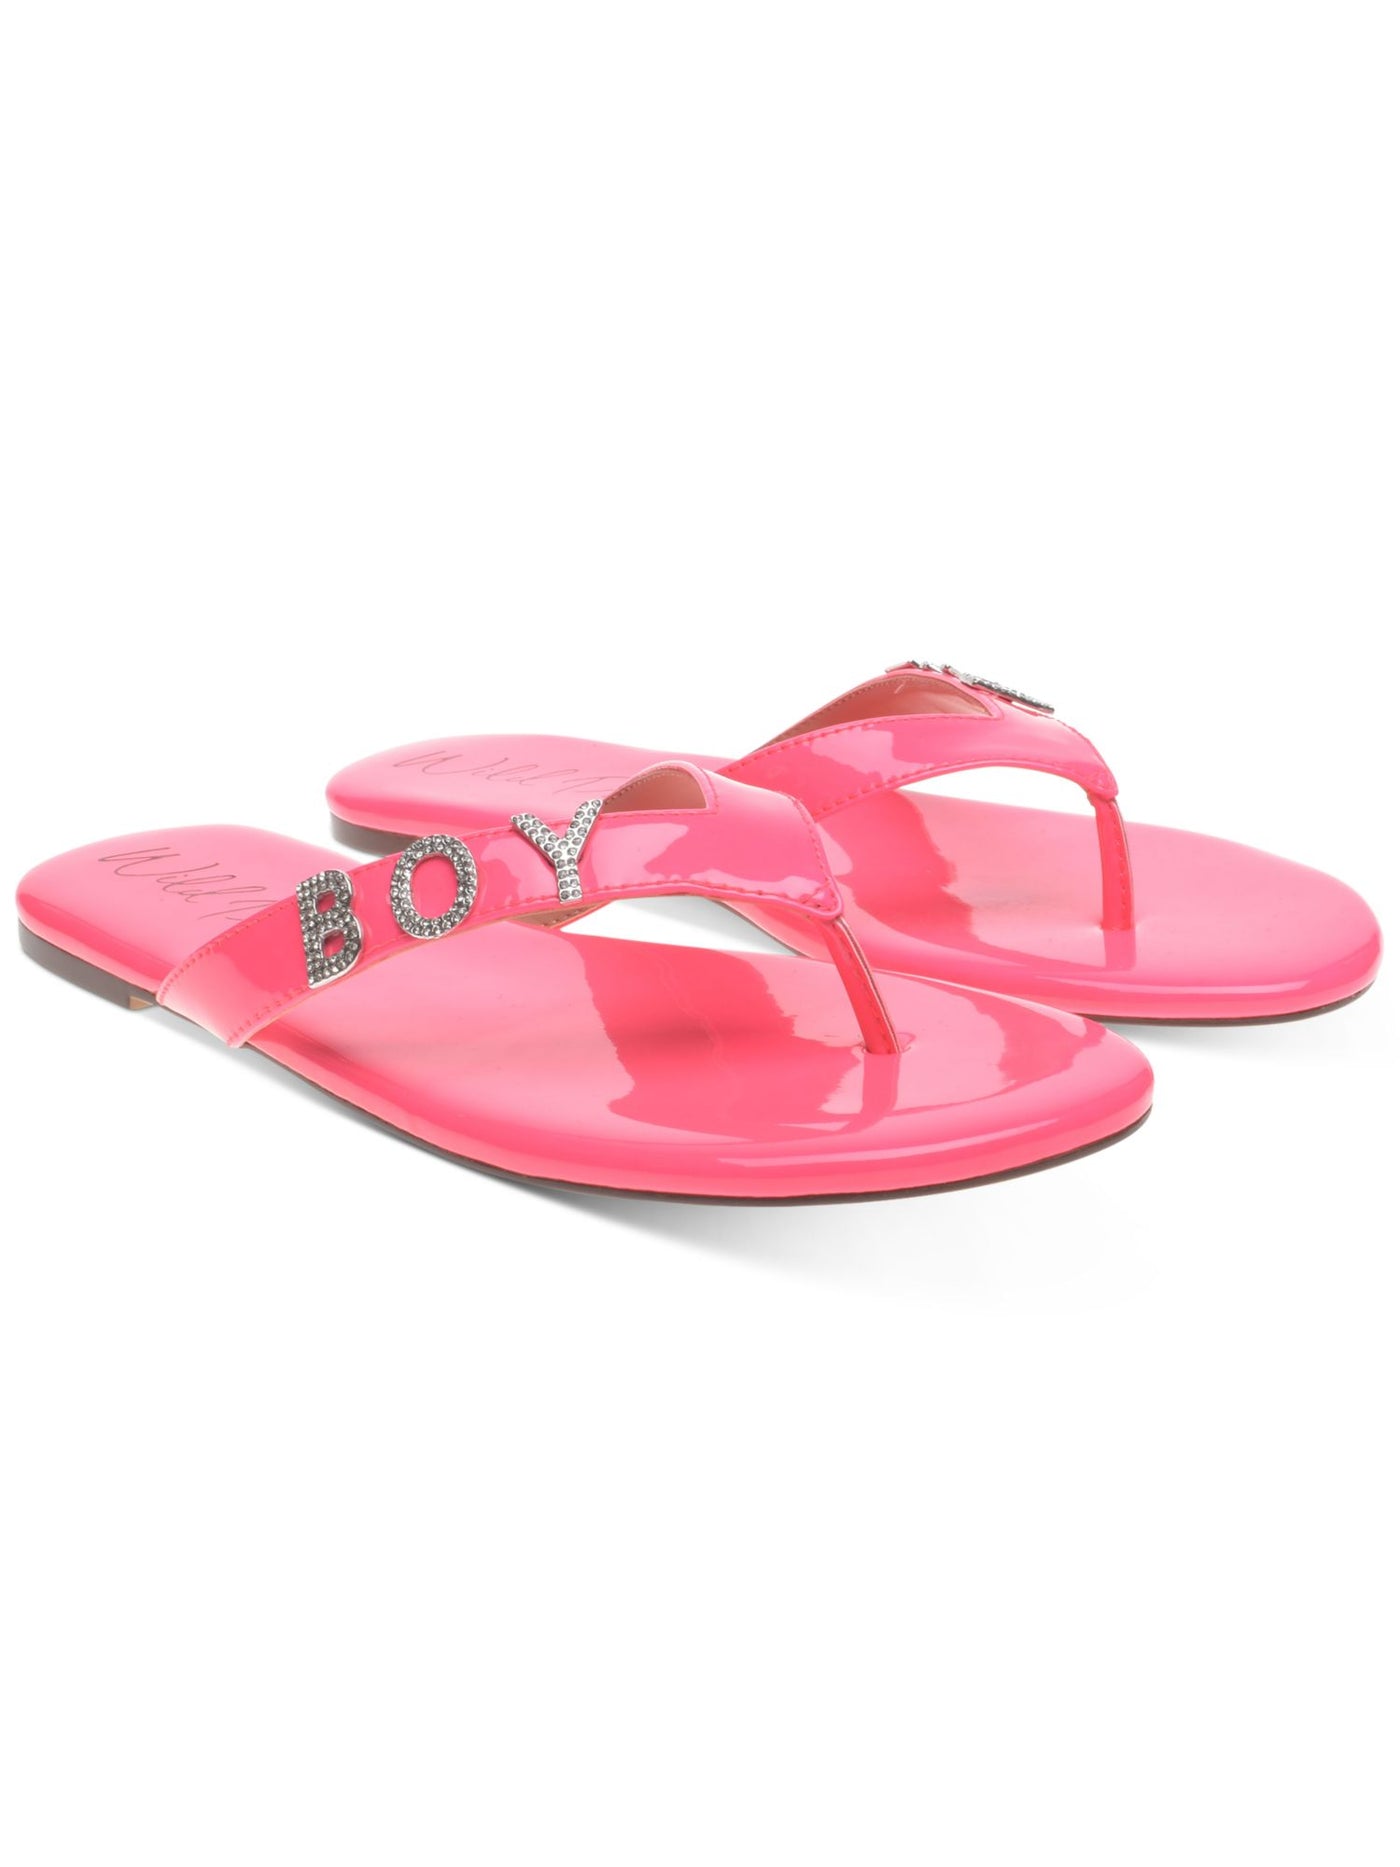 WILD PAIR Womens Pink Rhinestone Fantasia Round Toe Slip On Thong Sandals Shoes 7.5 M